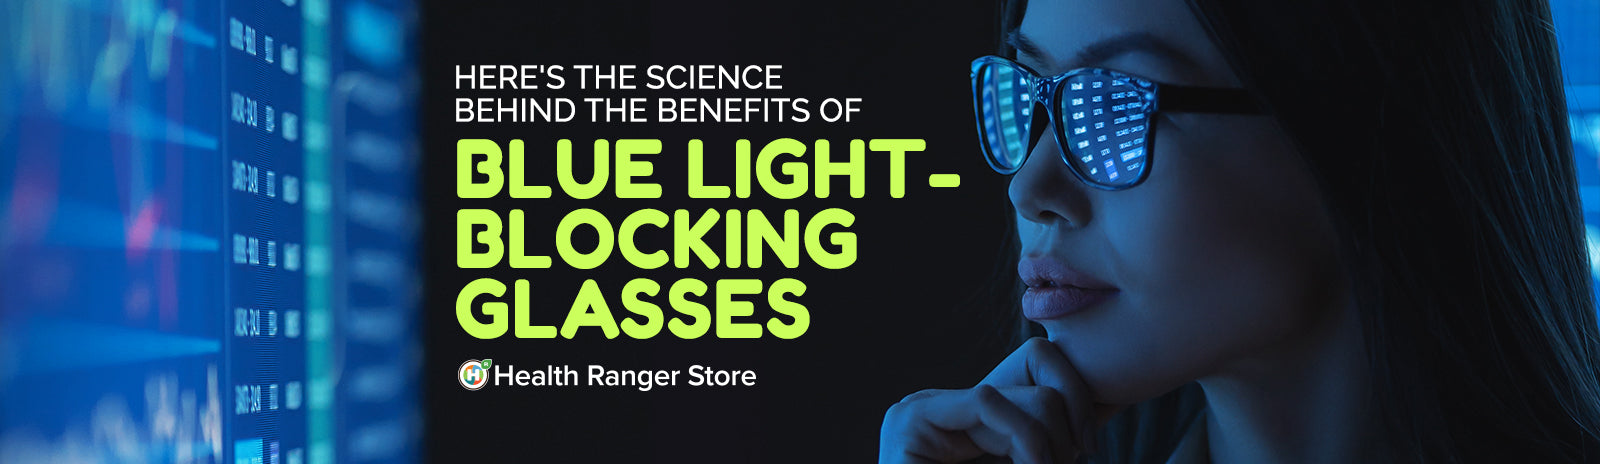 Benefits of wearing blue light-blocking glasses